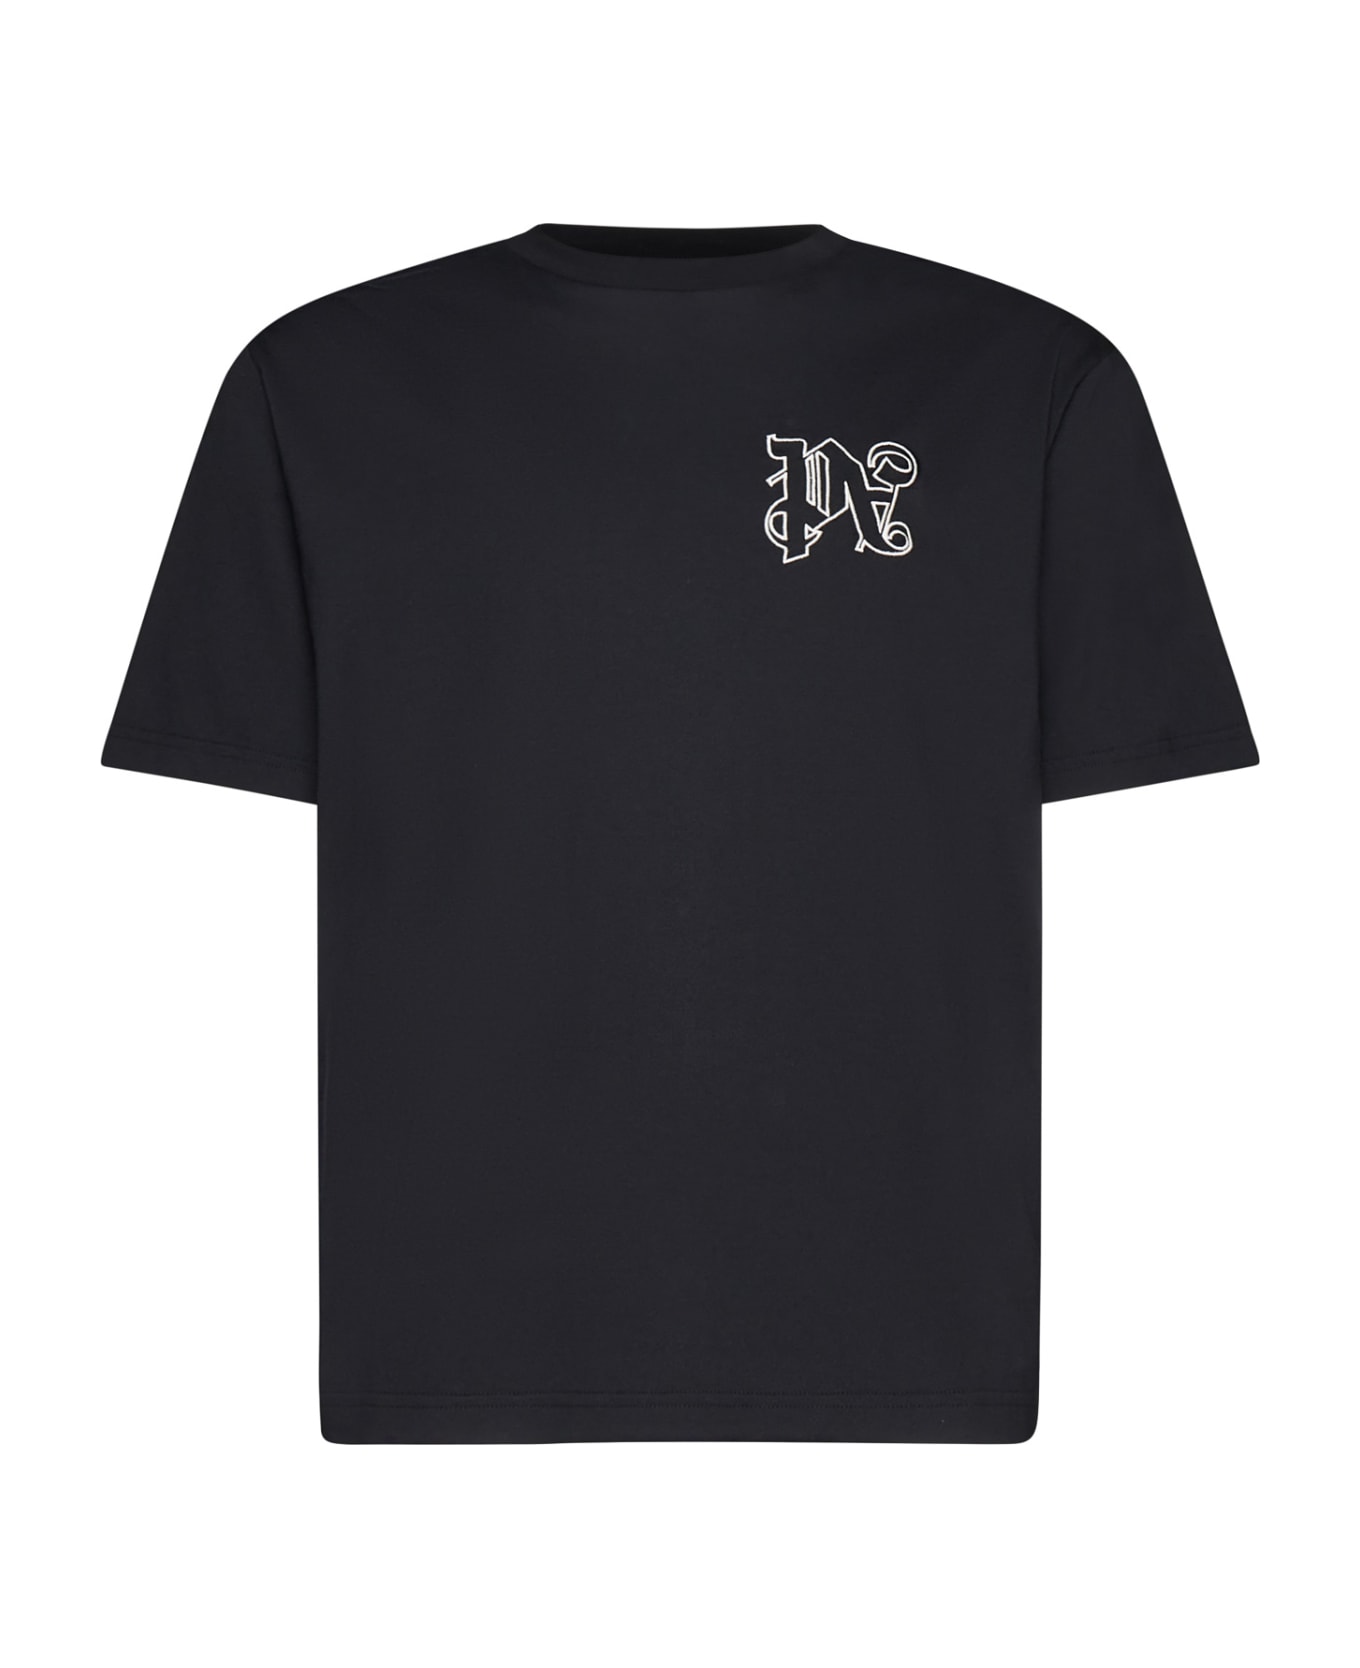 Palm Angels Black T-shirt With Monogram - Black